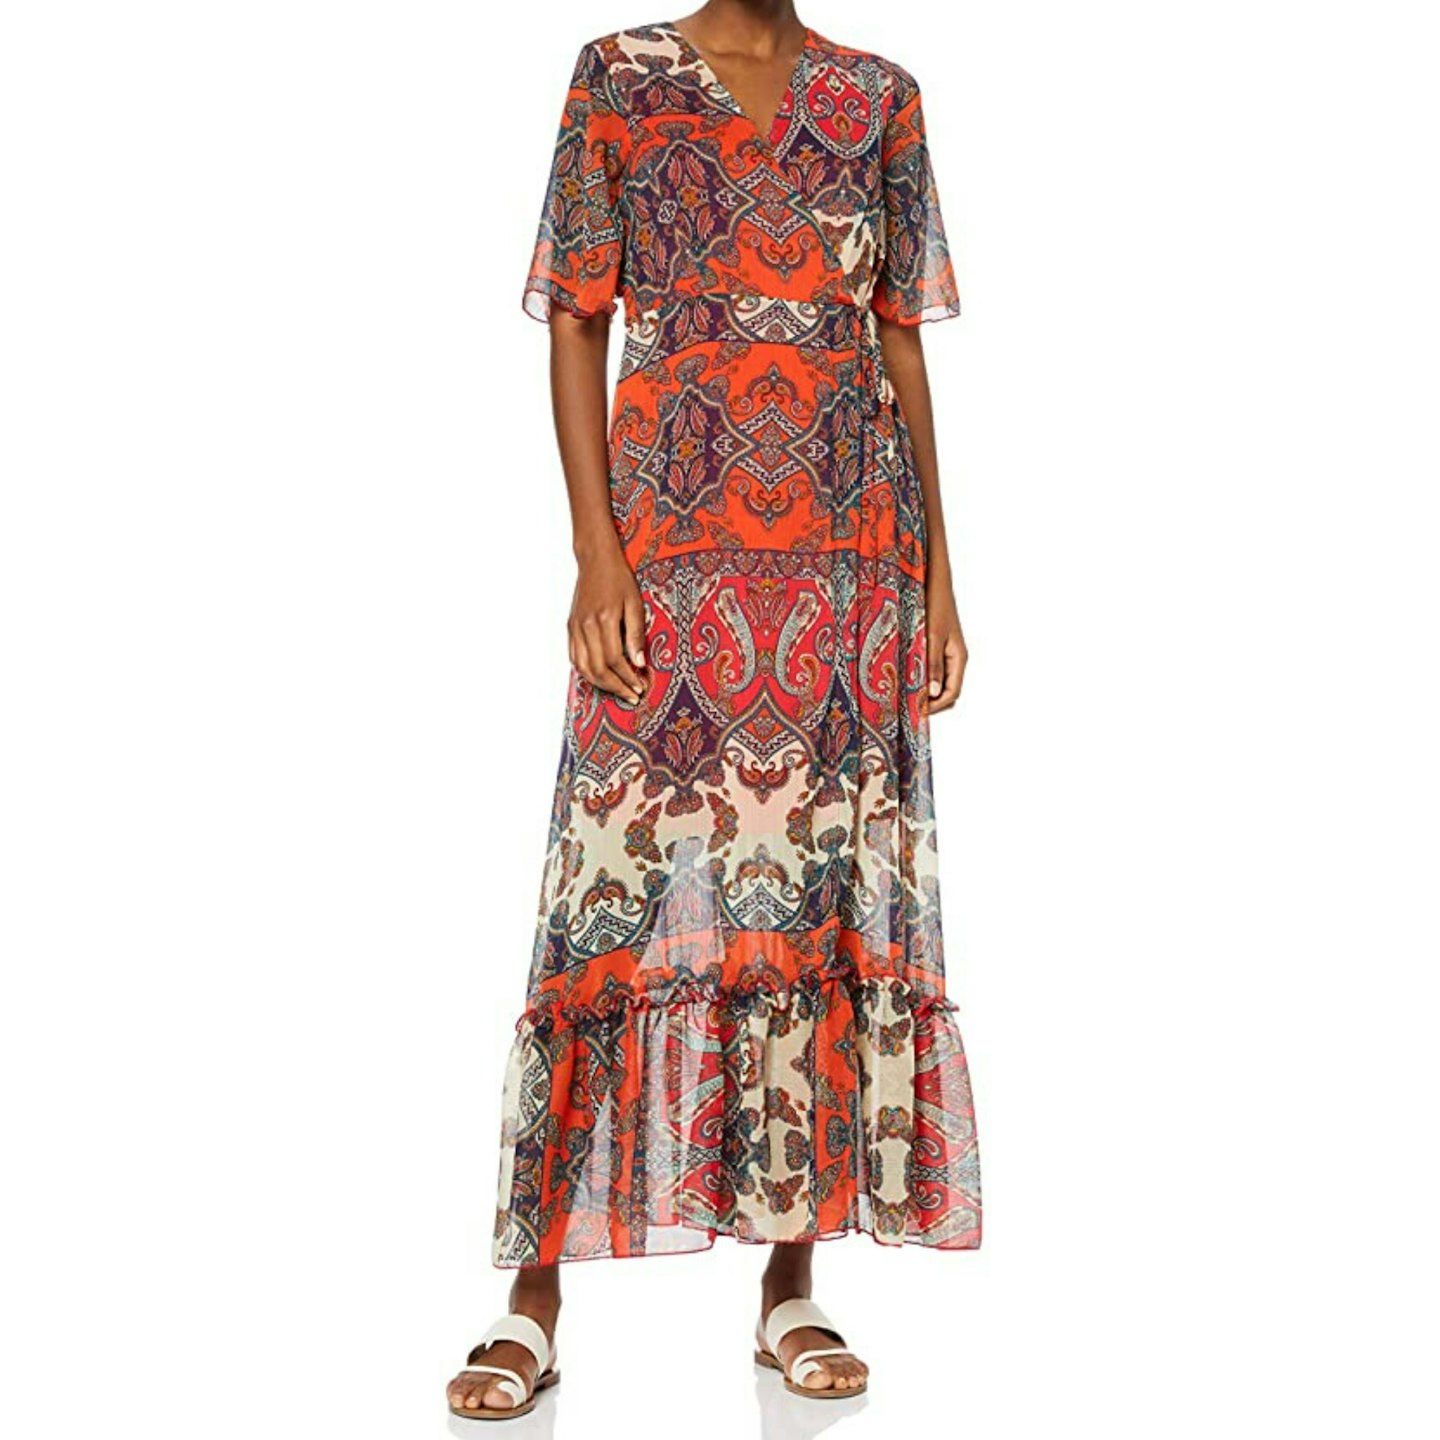 Amazon Brand - find. Women's Maxi Chiffon Wrap Dress